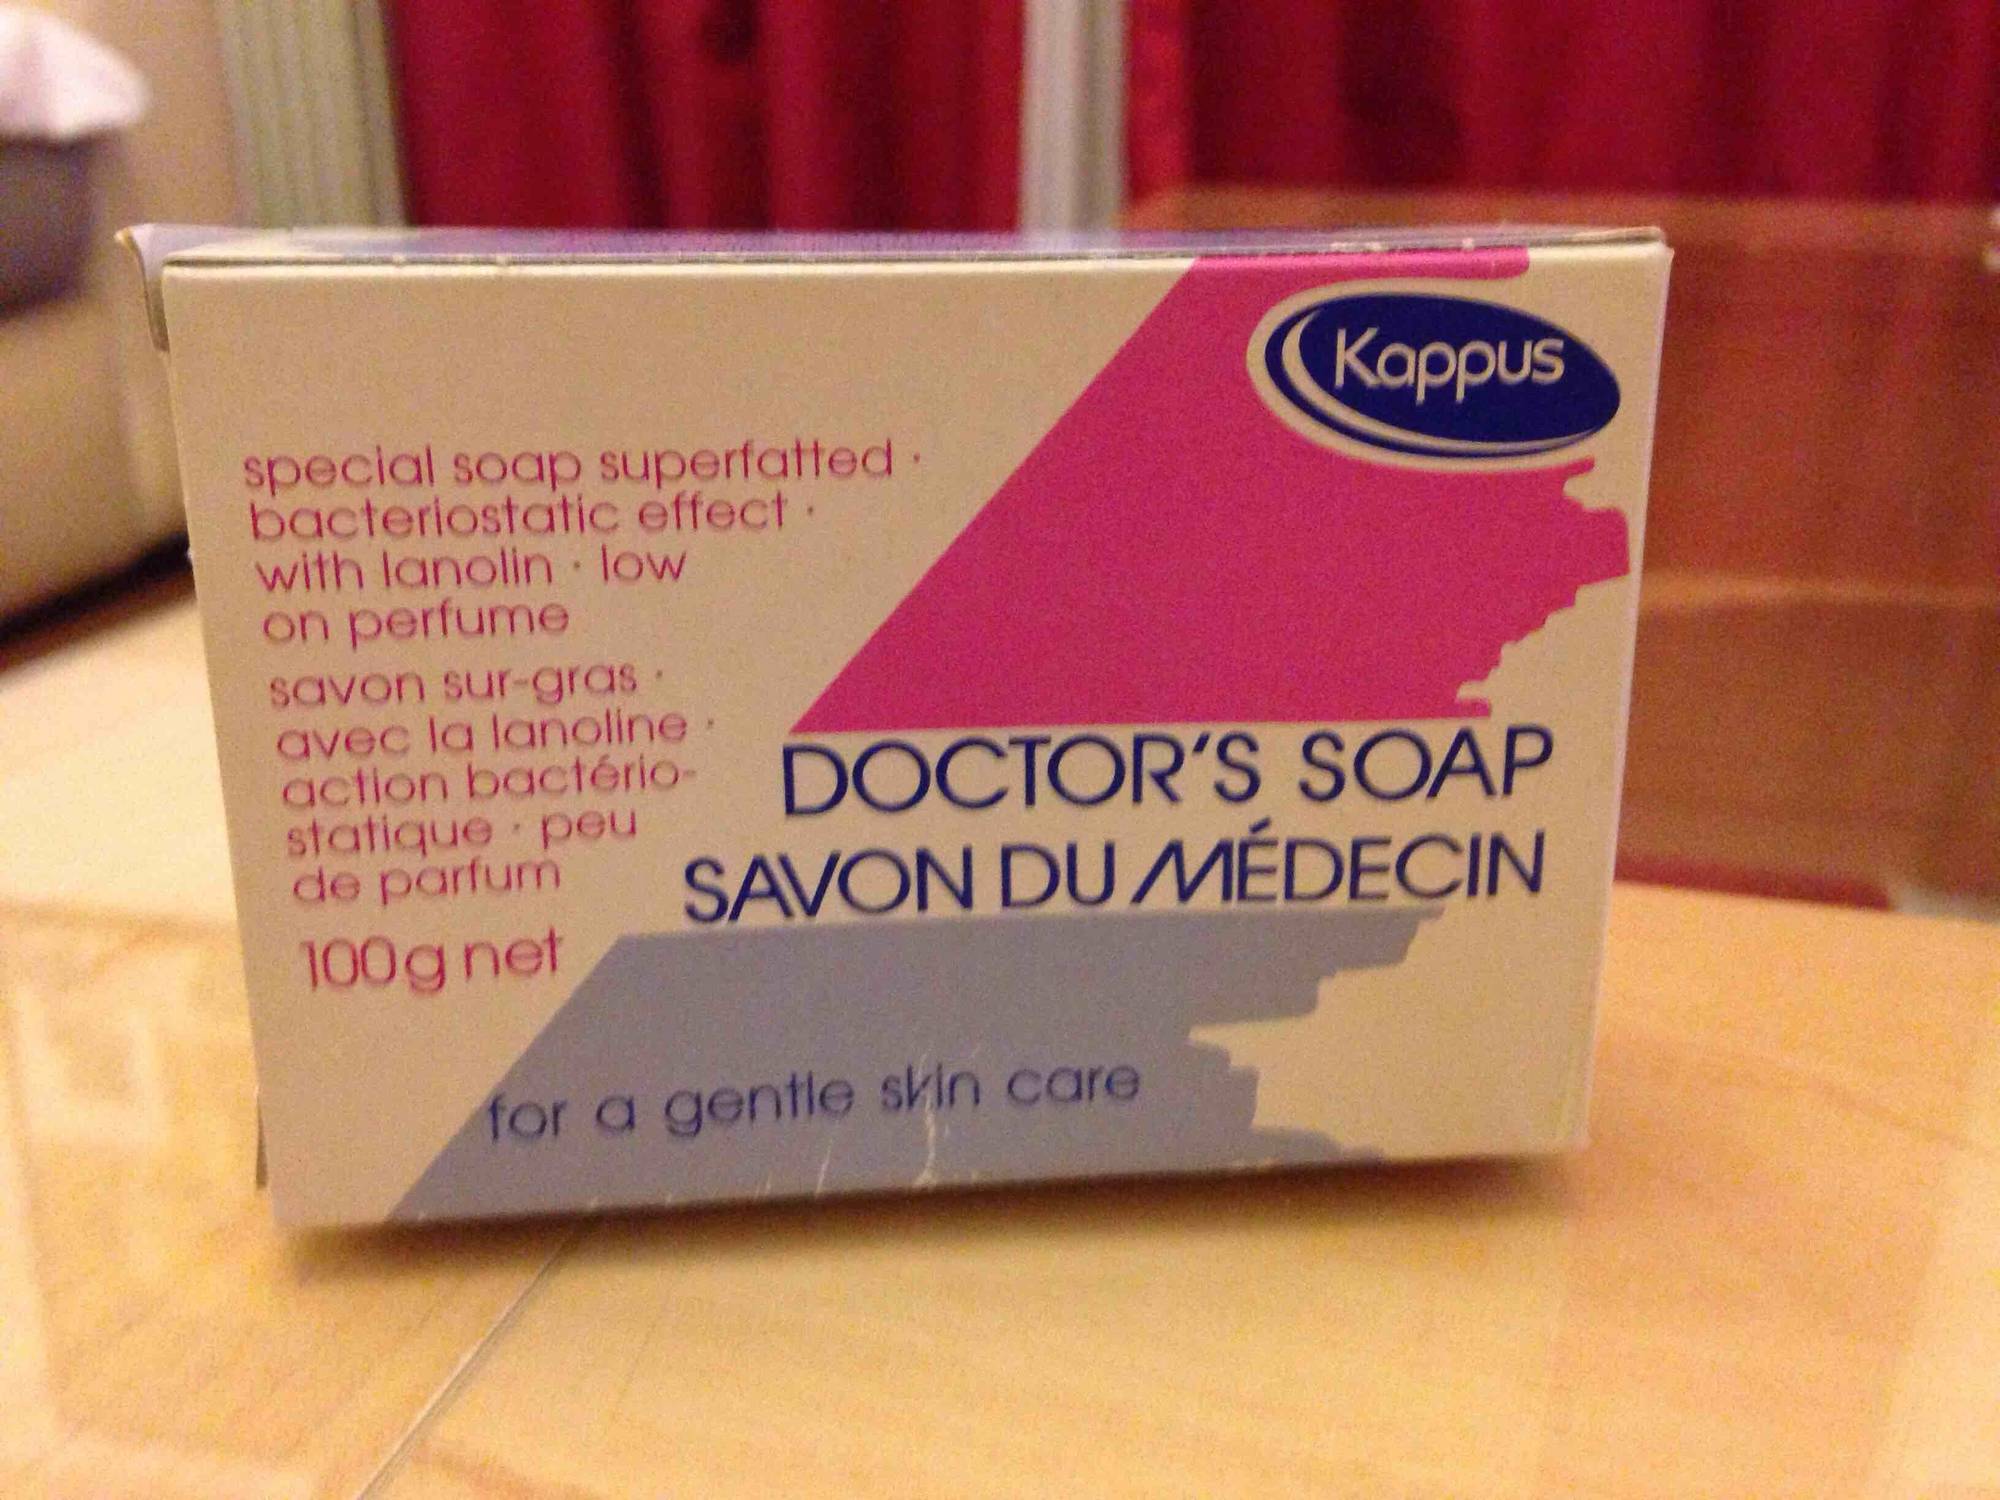 KAPPUS - Doctor's soap - Savon surgras